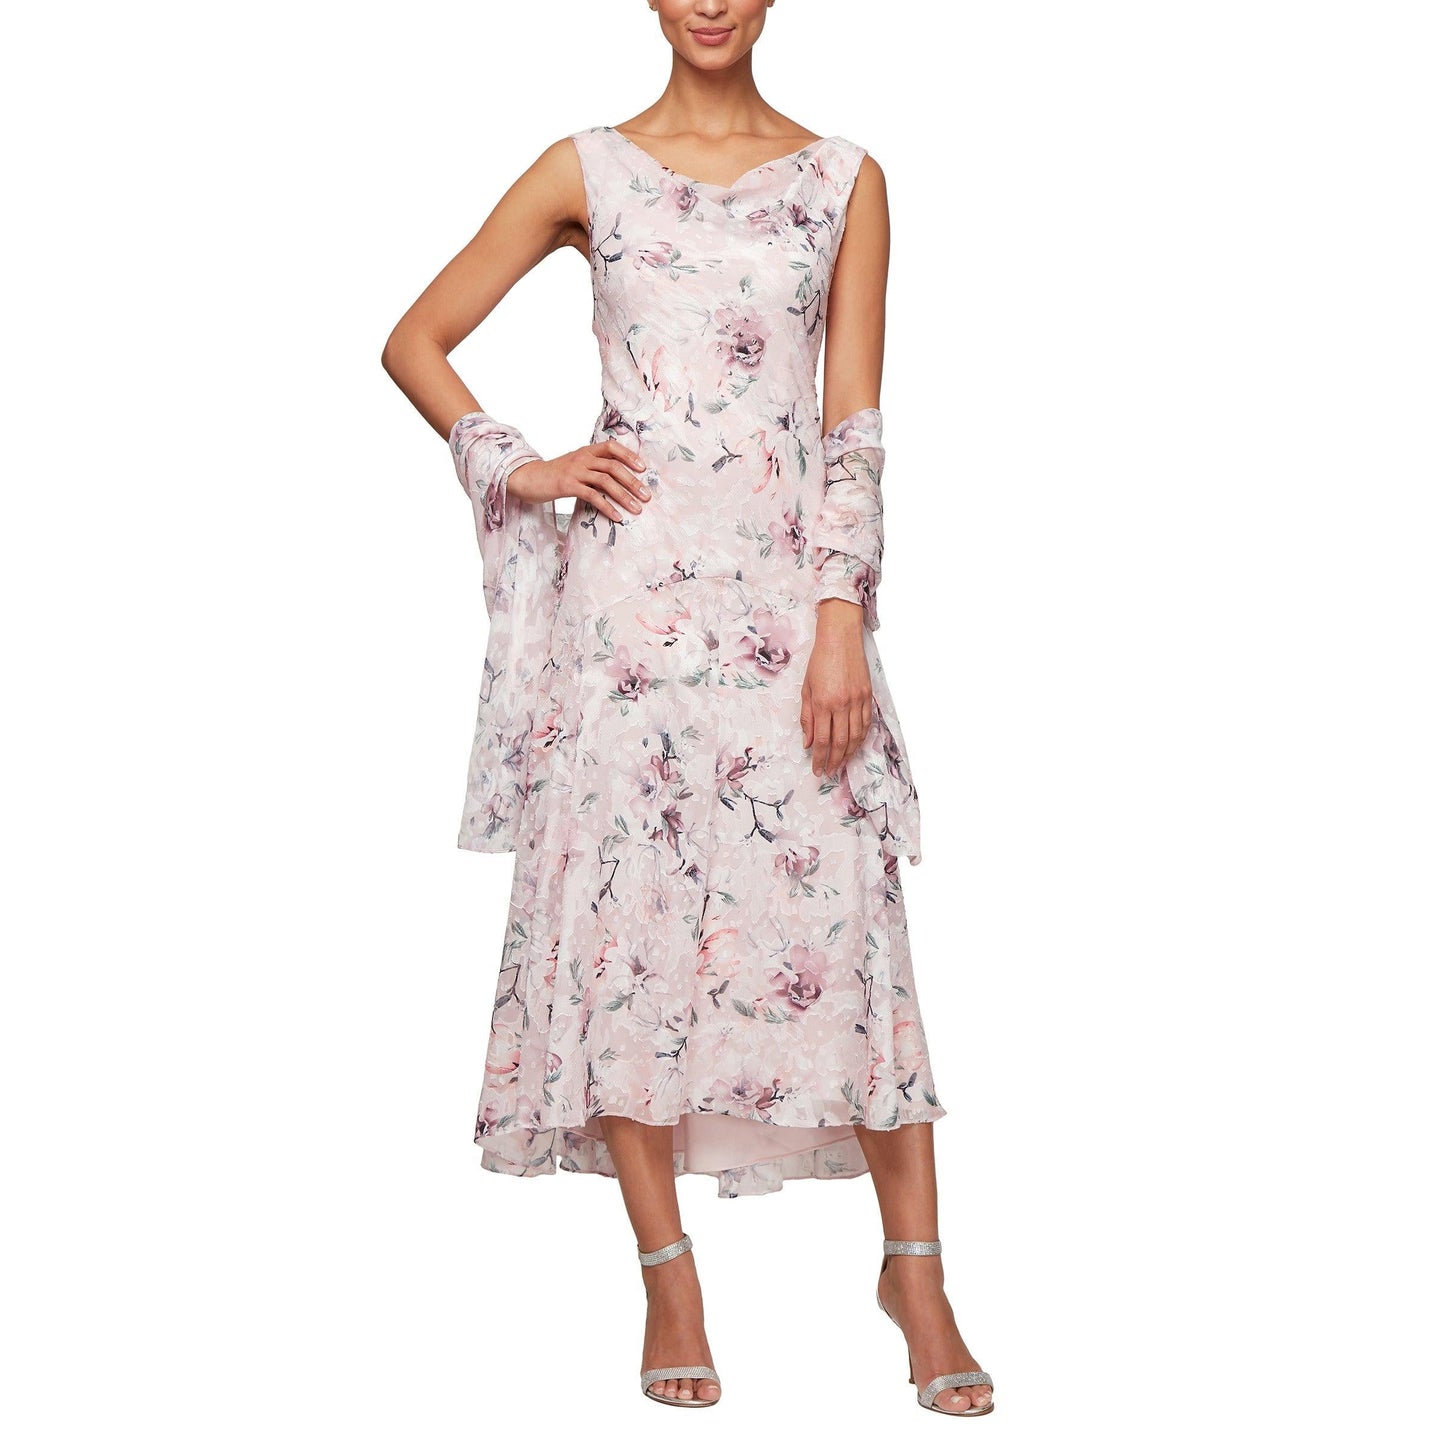 Alex Evenings High Low Floral Chiffon Dress 8175719 - The Dress Outlet